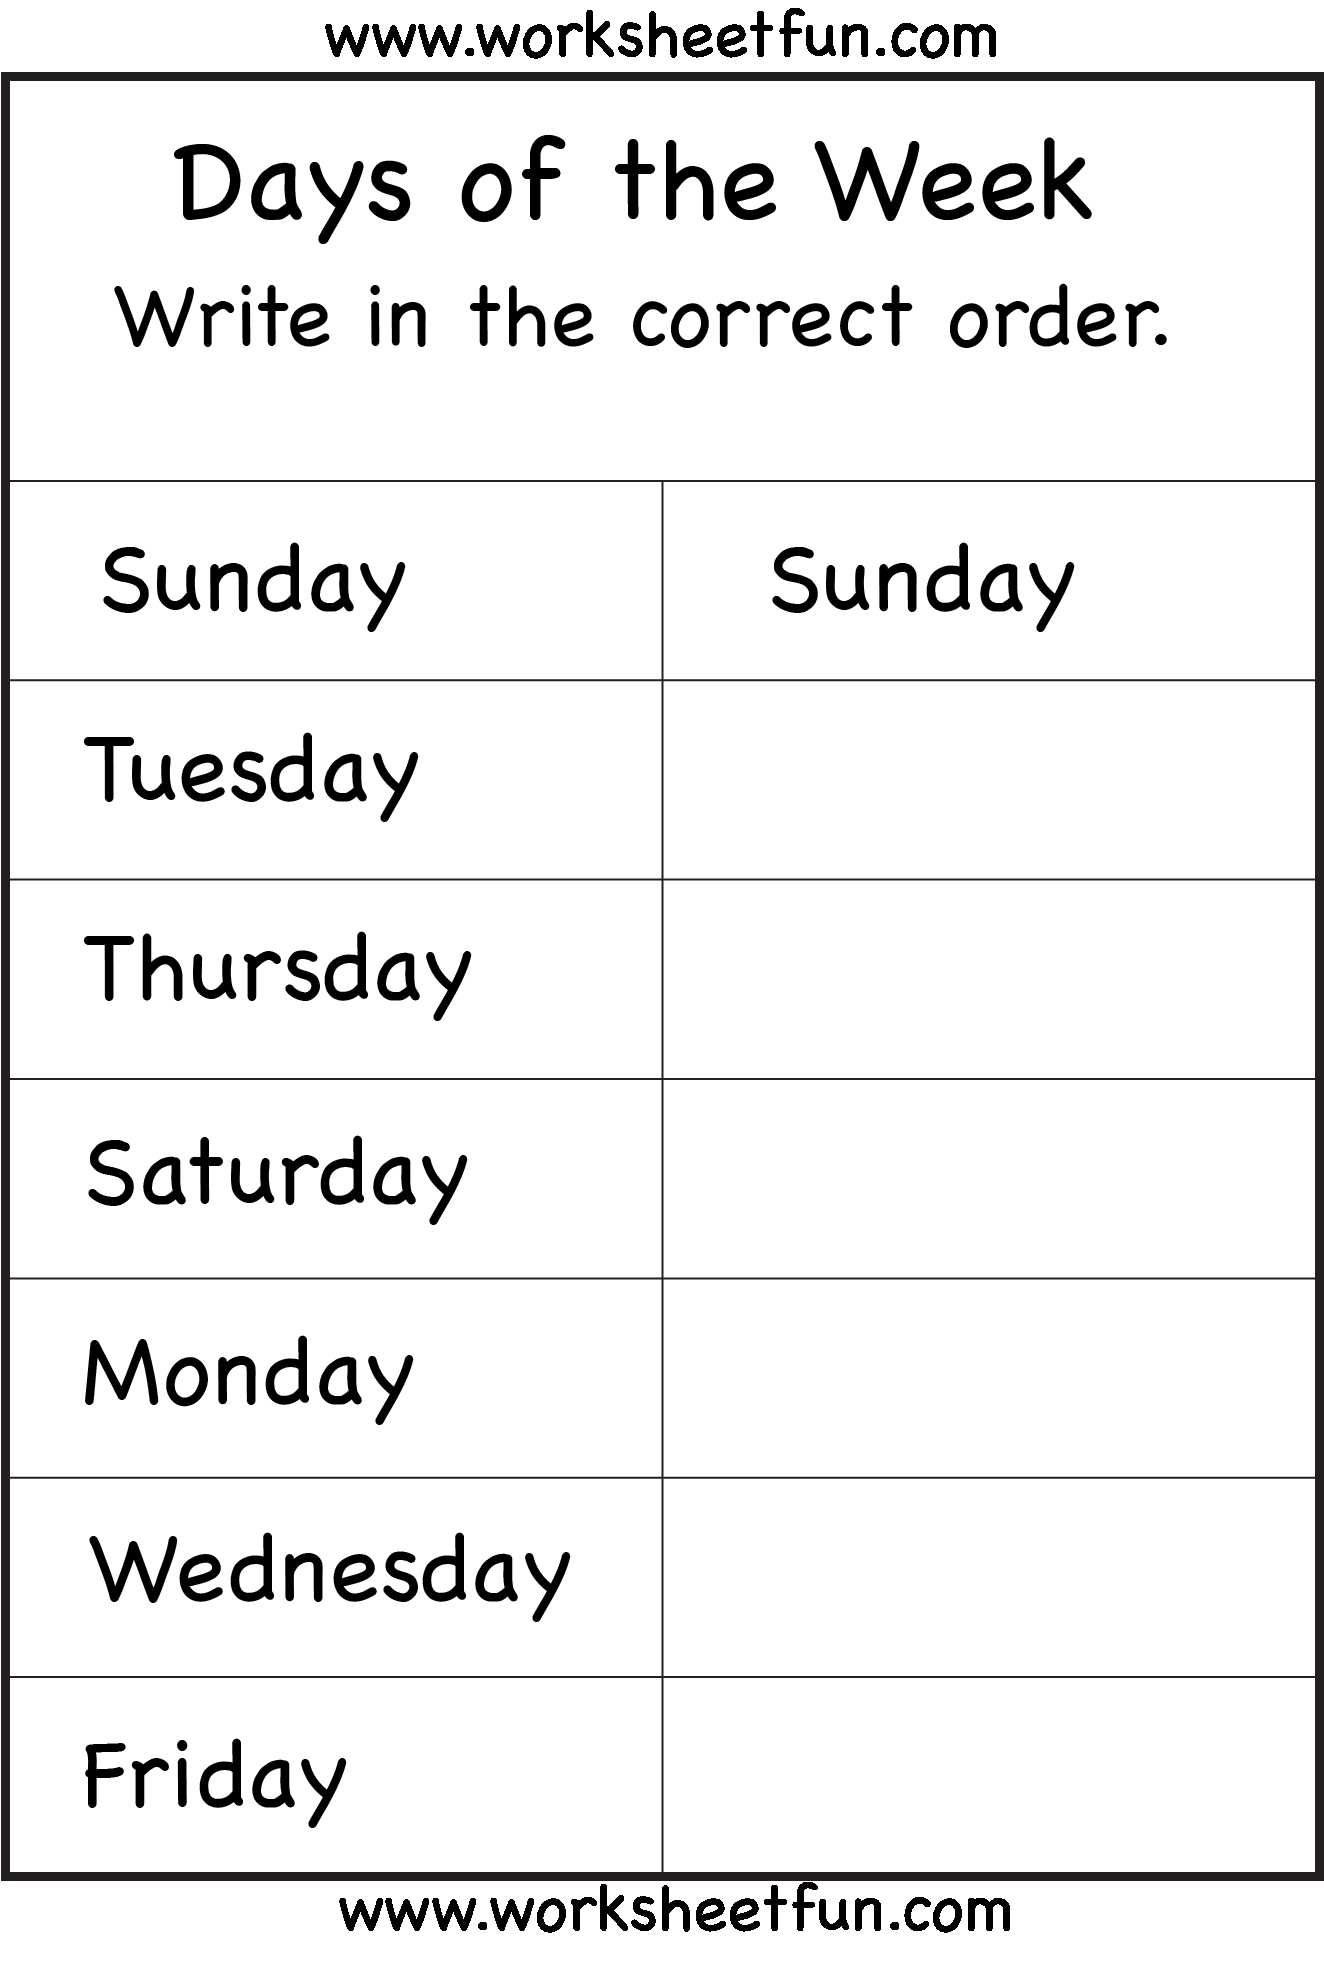 Auditory Processing Worksheets as Well as Days Of the Week Worksheet Printable Worksheets